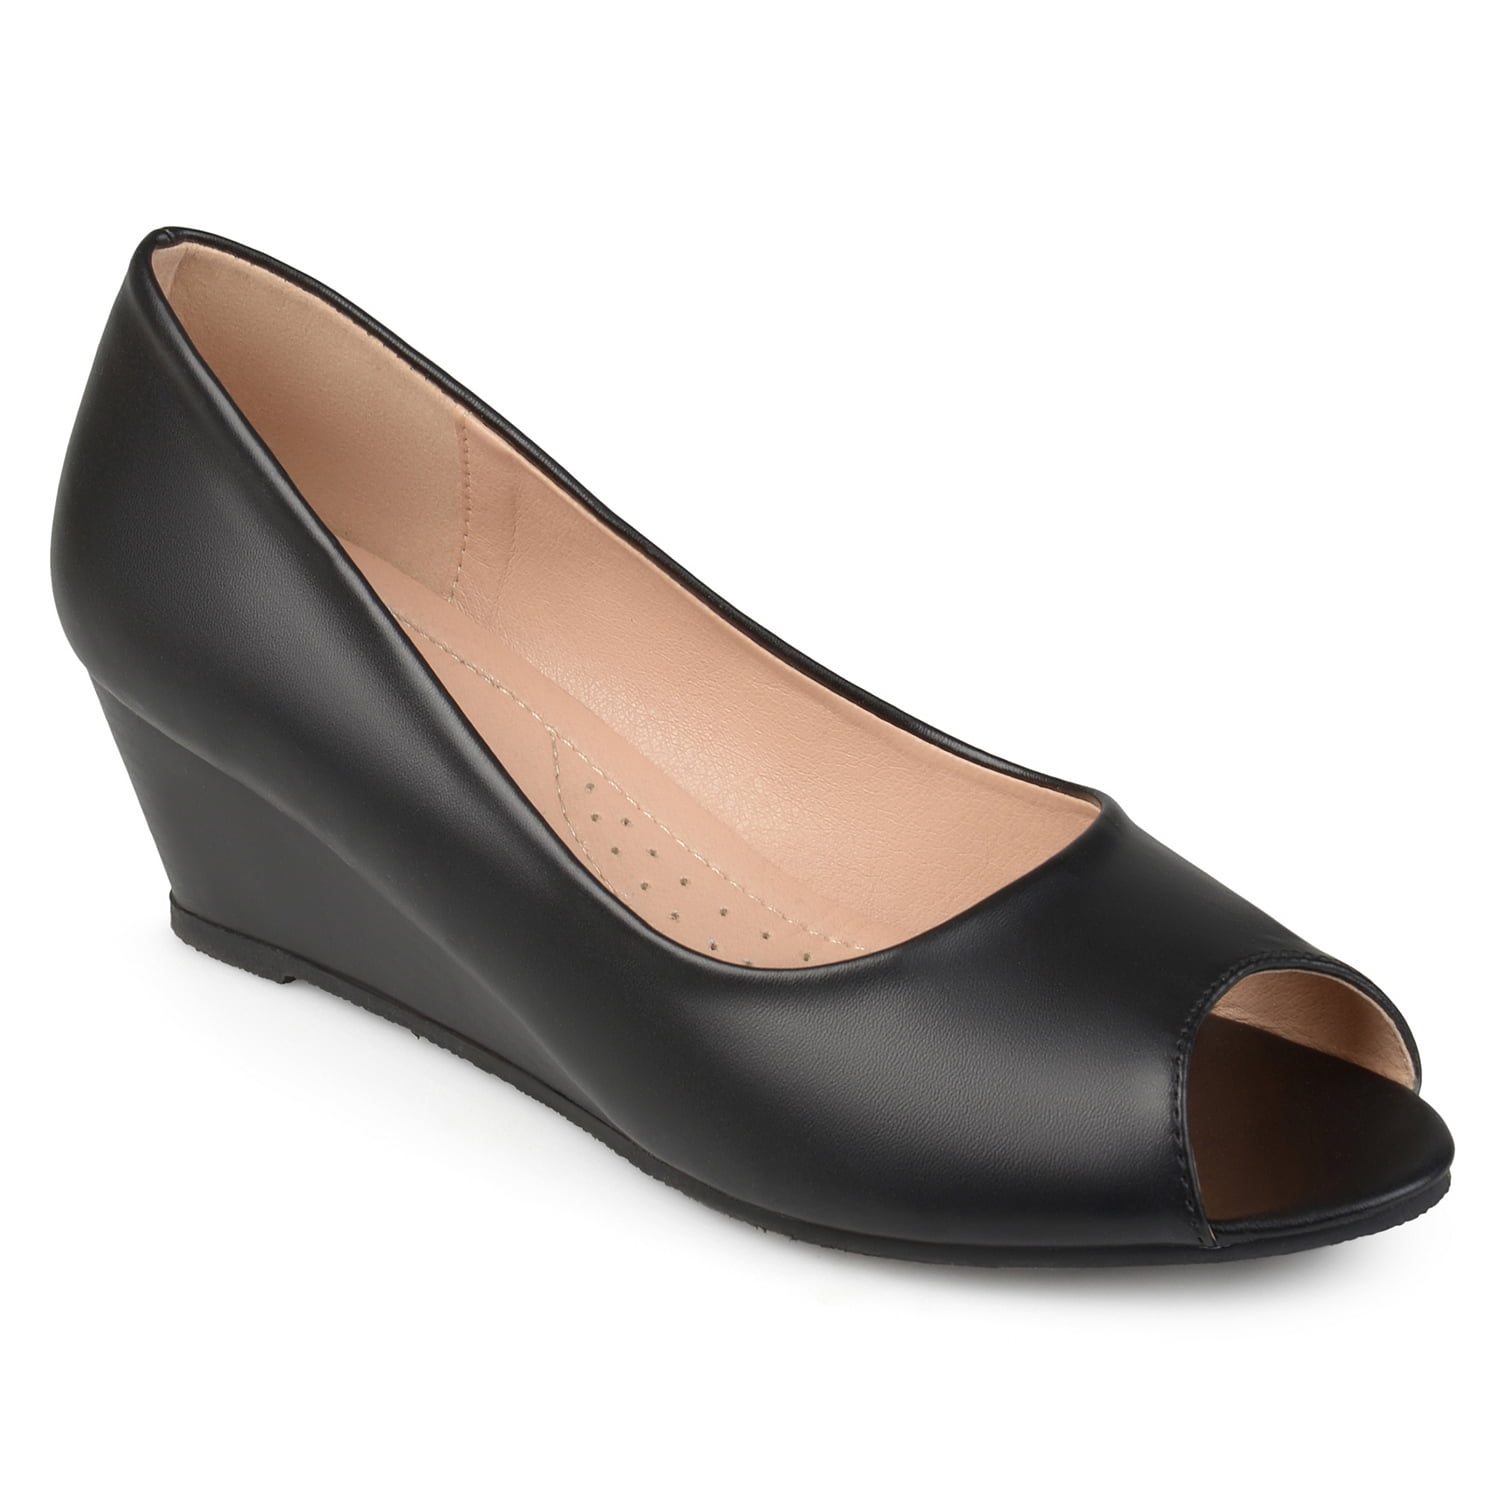 Brinley Co. - Brinley Co. Women's Faux Leather Comfort-sole Peep-toe ...